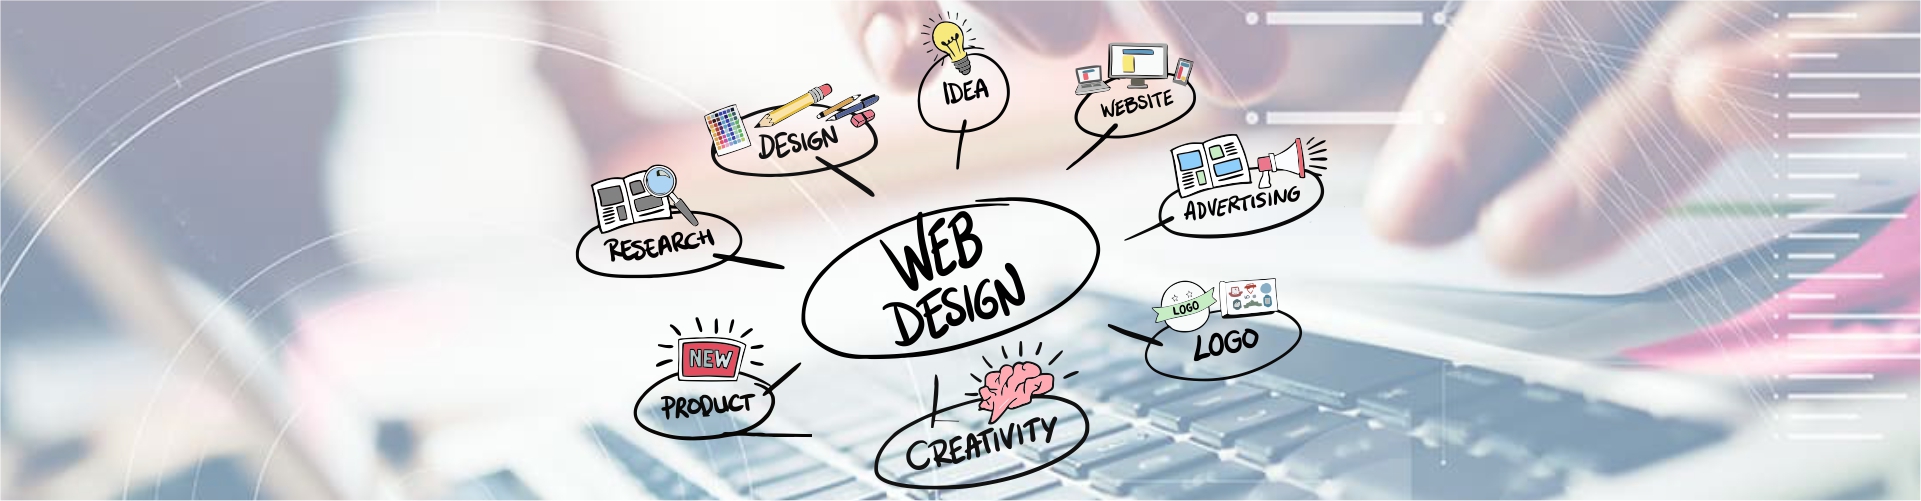 Design solutions and integration services, Website optimization service, Web design technology Integration services